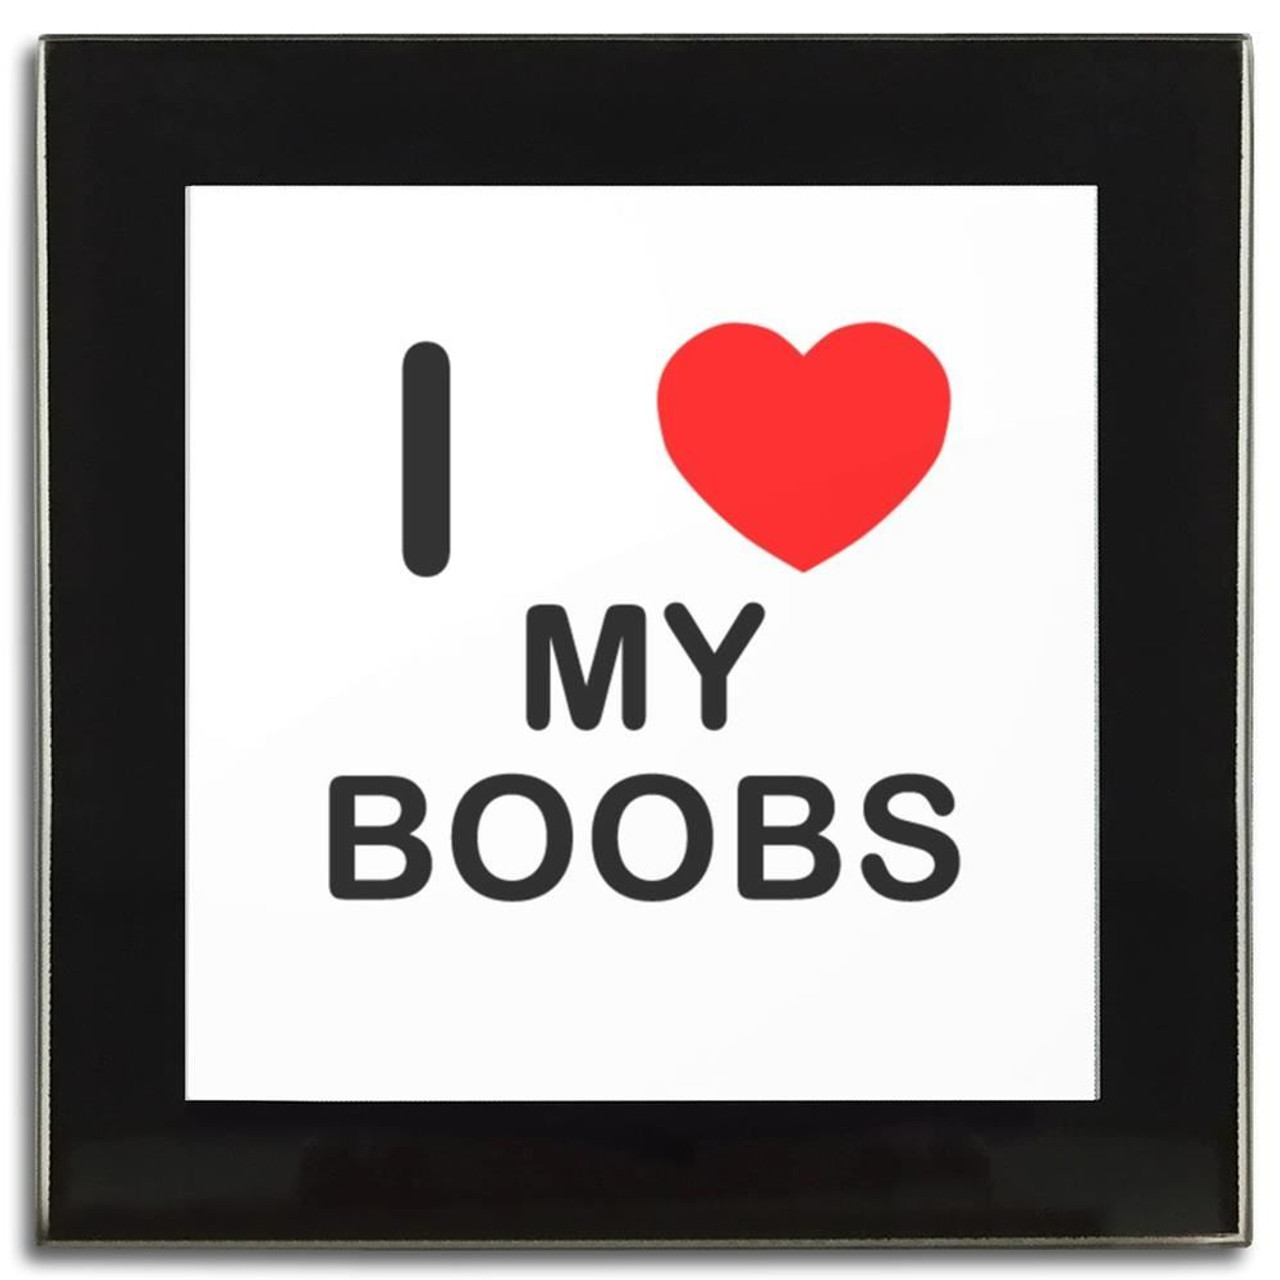 I Love My Boobs - Square Glass Coaster